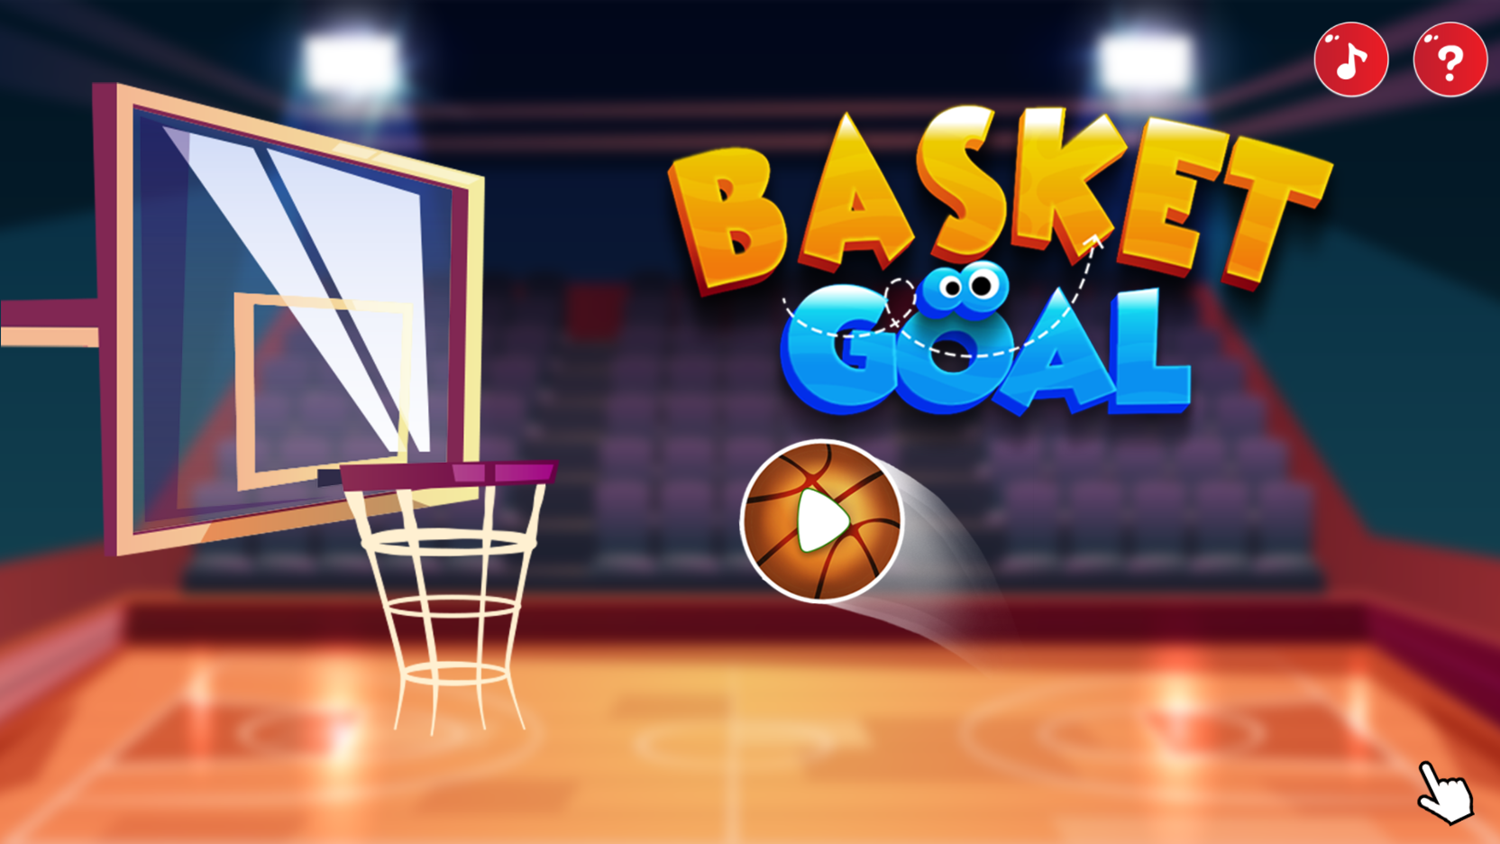 Basket Goal Math Game Welcome Screen Screenshot.